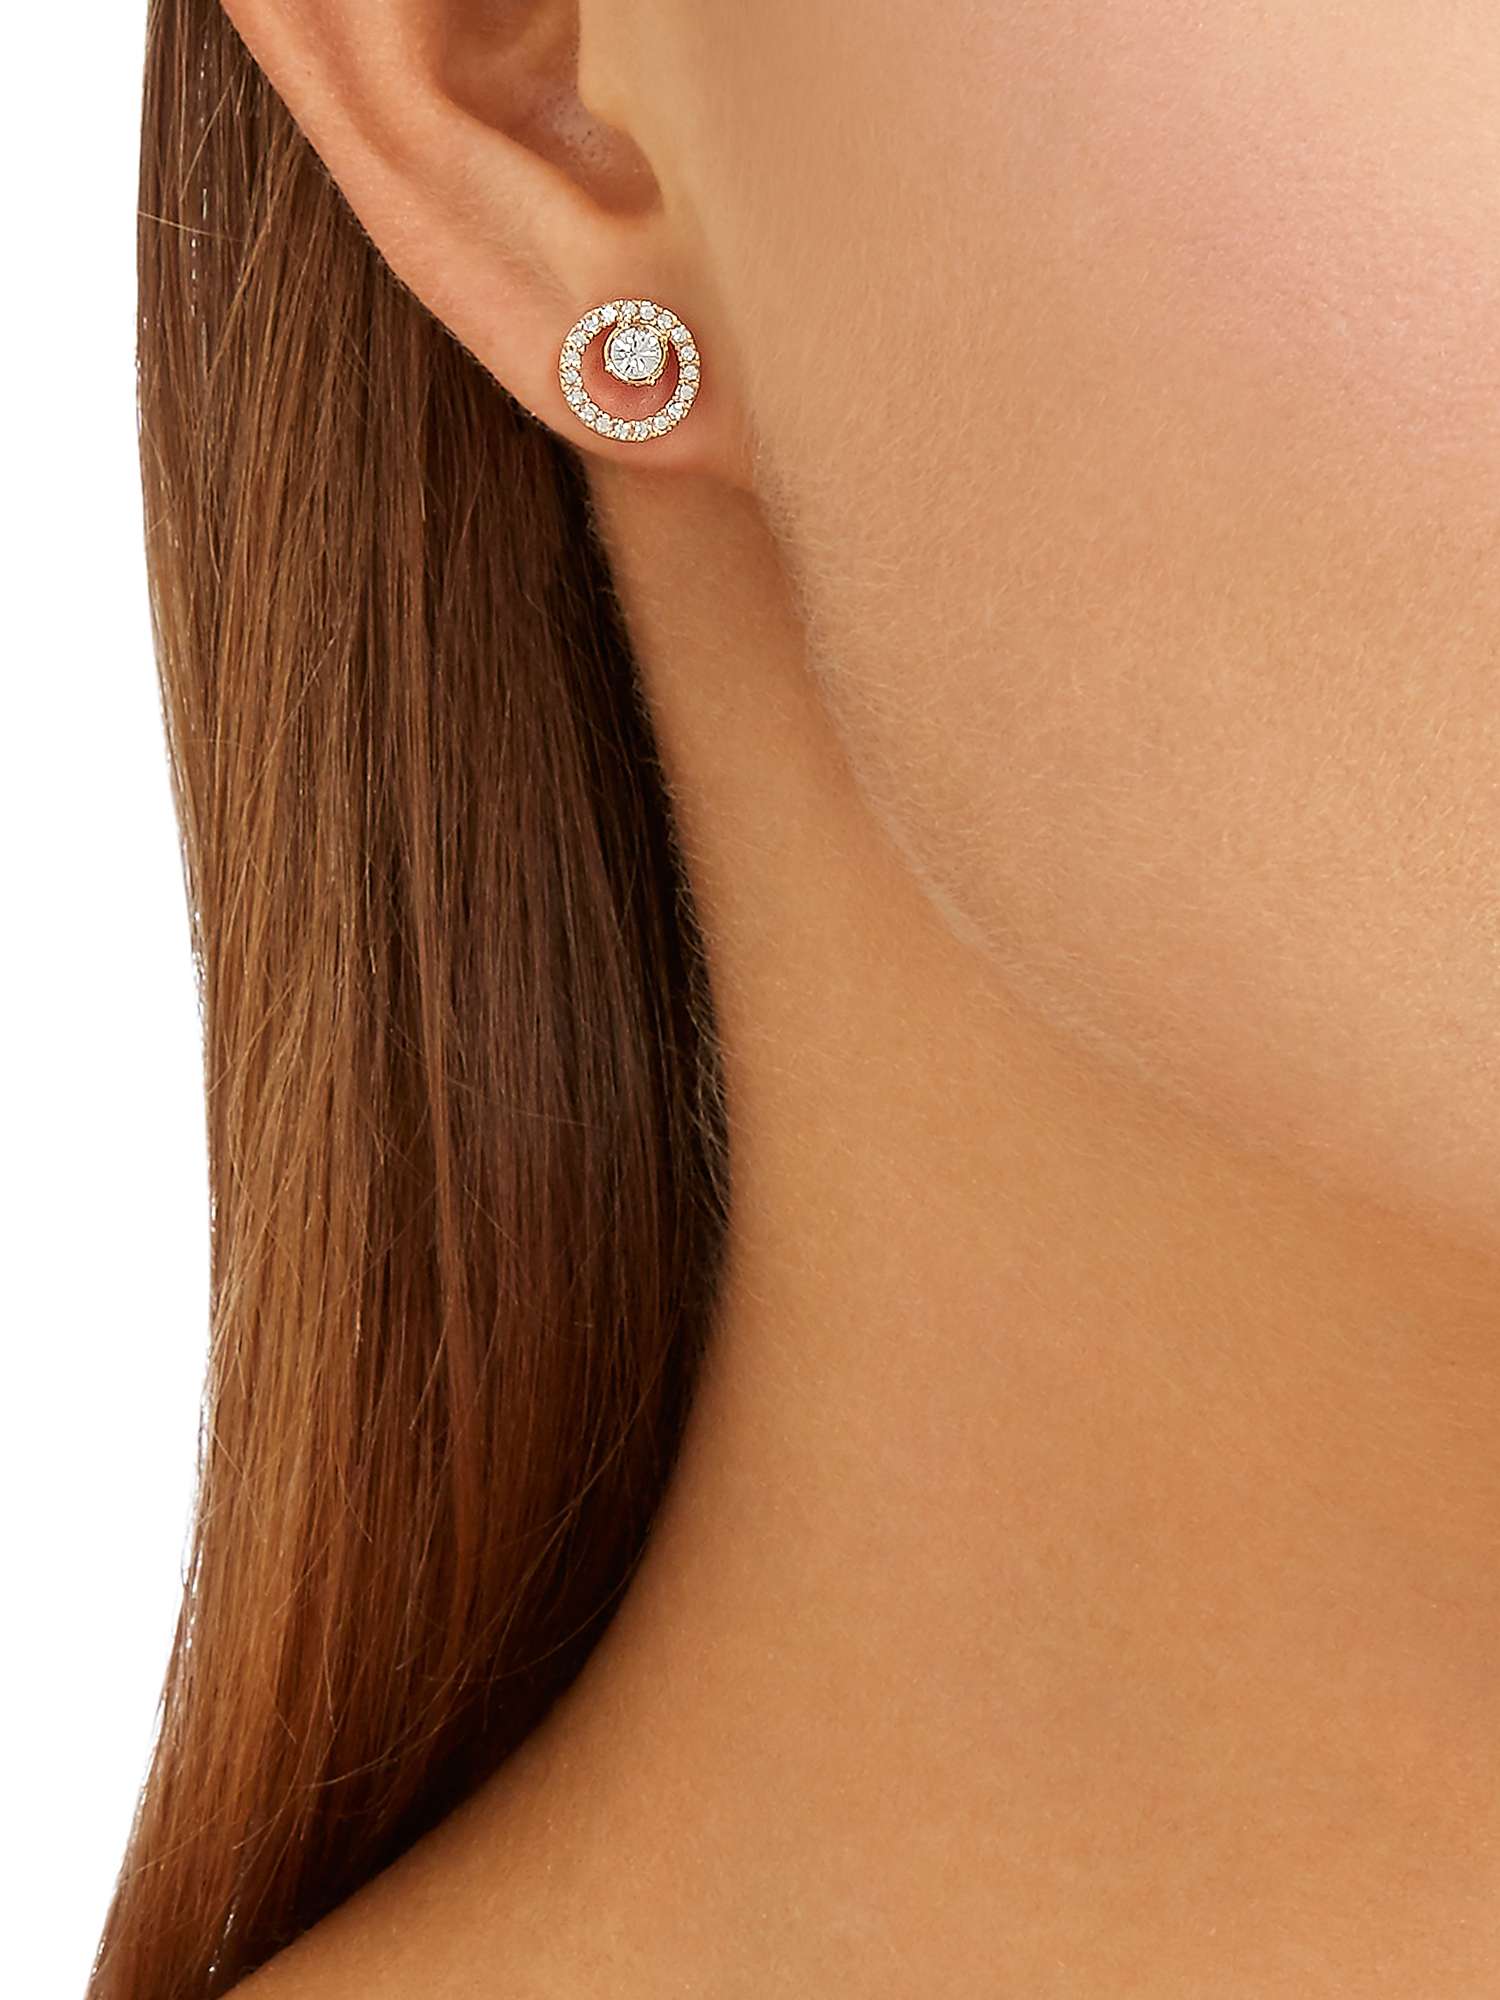 Buy Swarovski Creativity Crystal Pave Round Stud Earrings Online at johnlewis.com